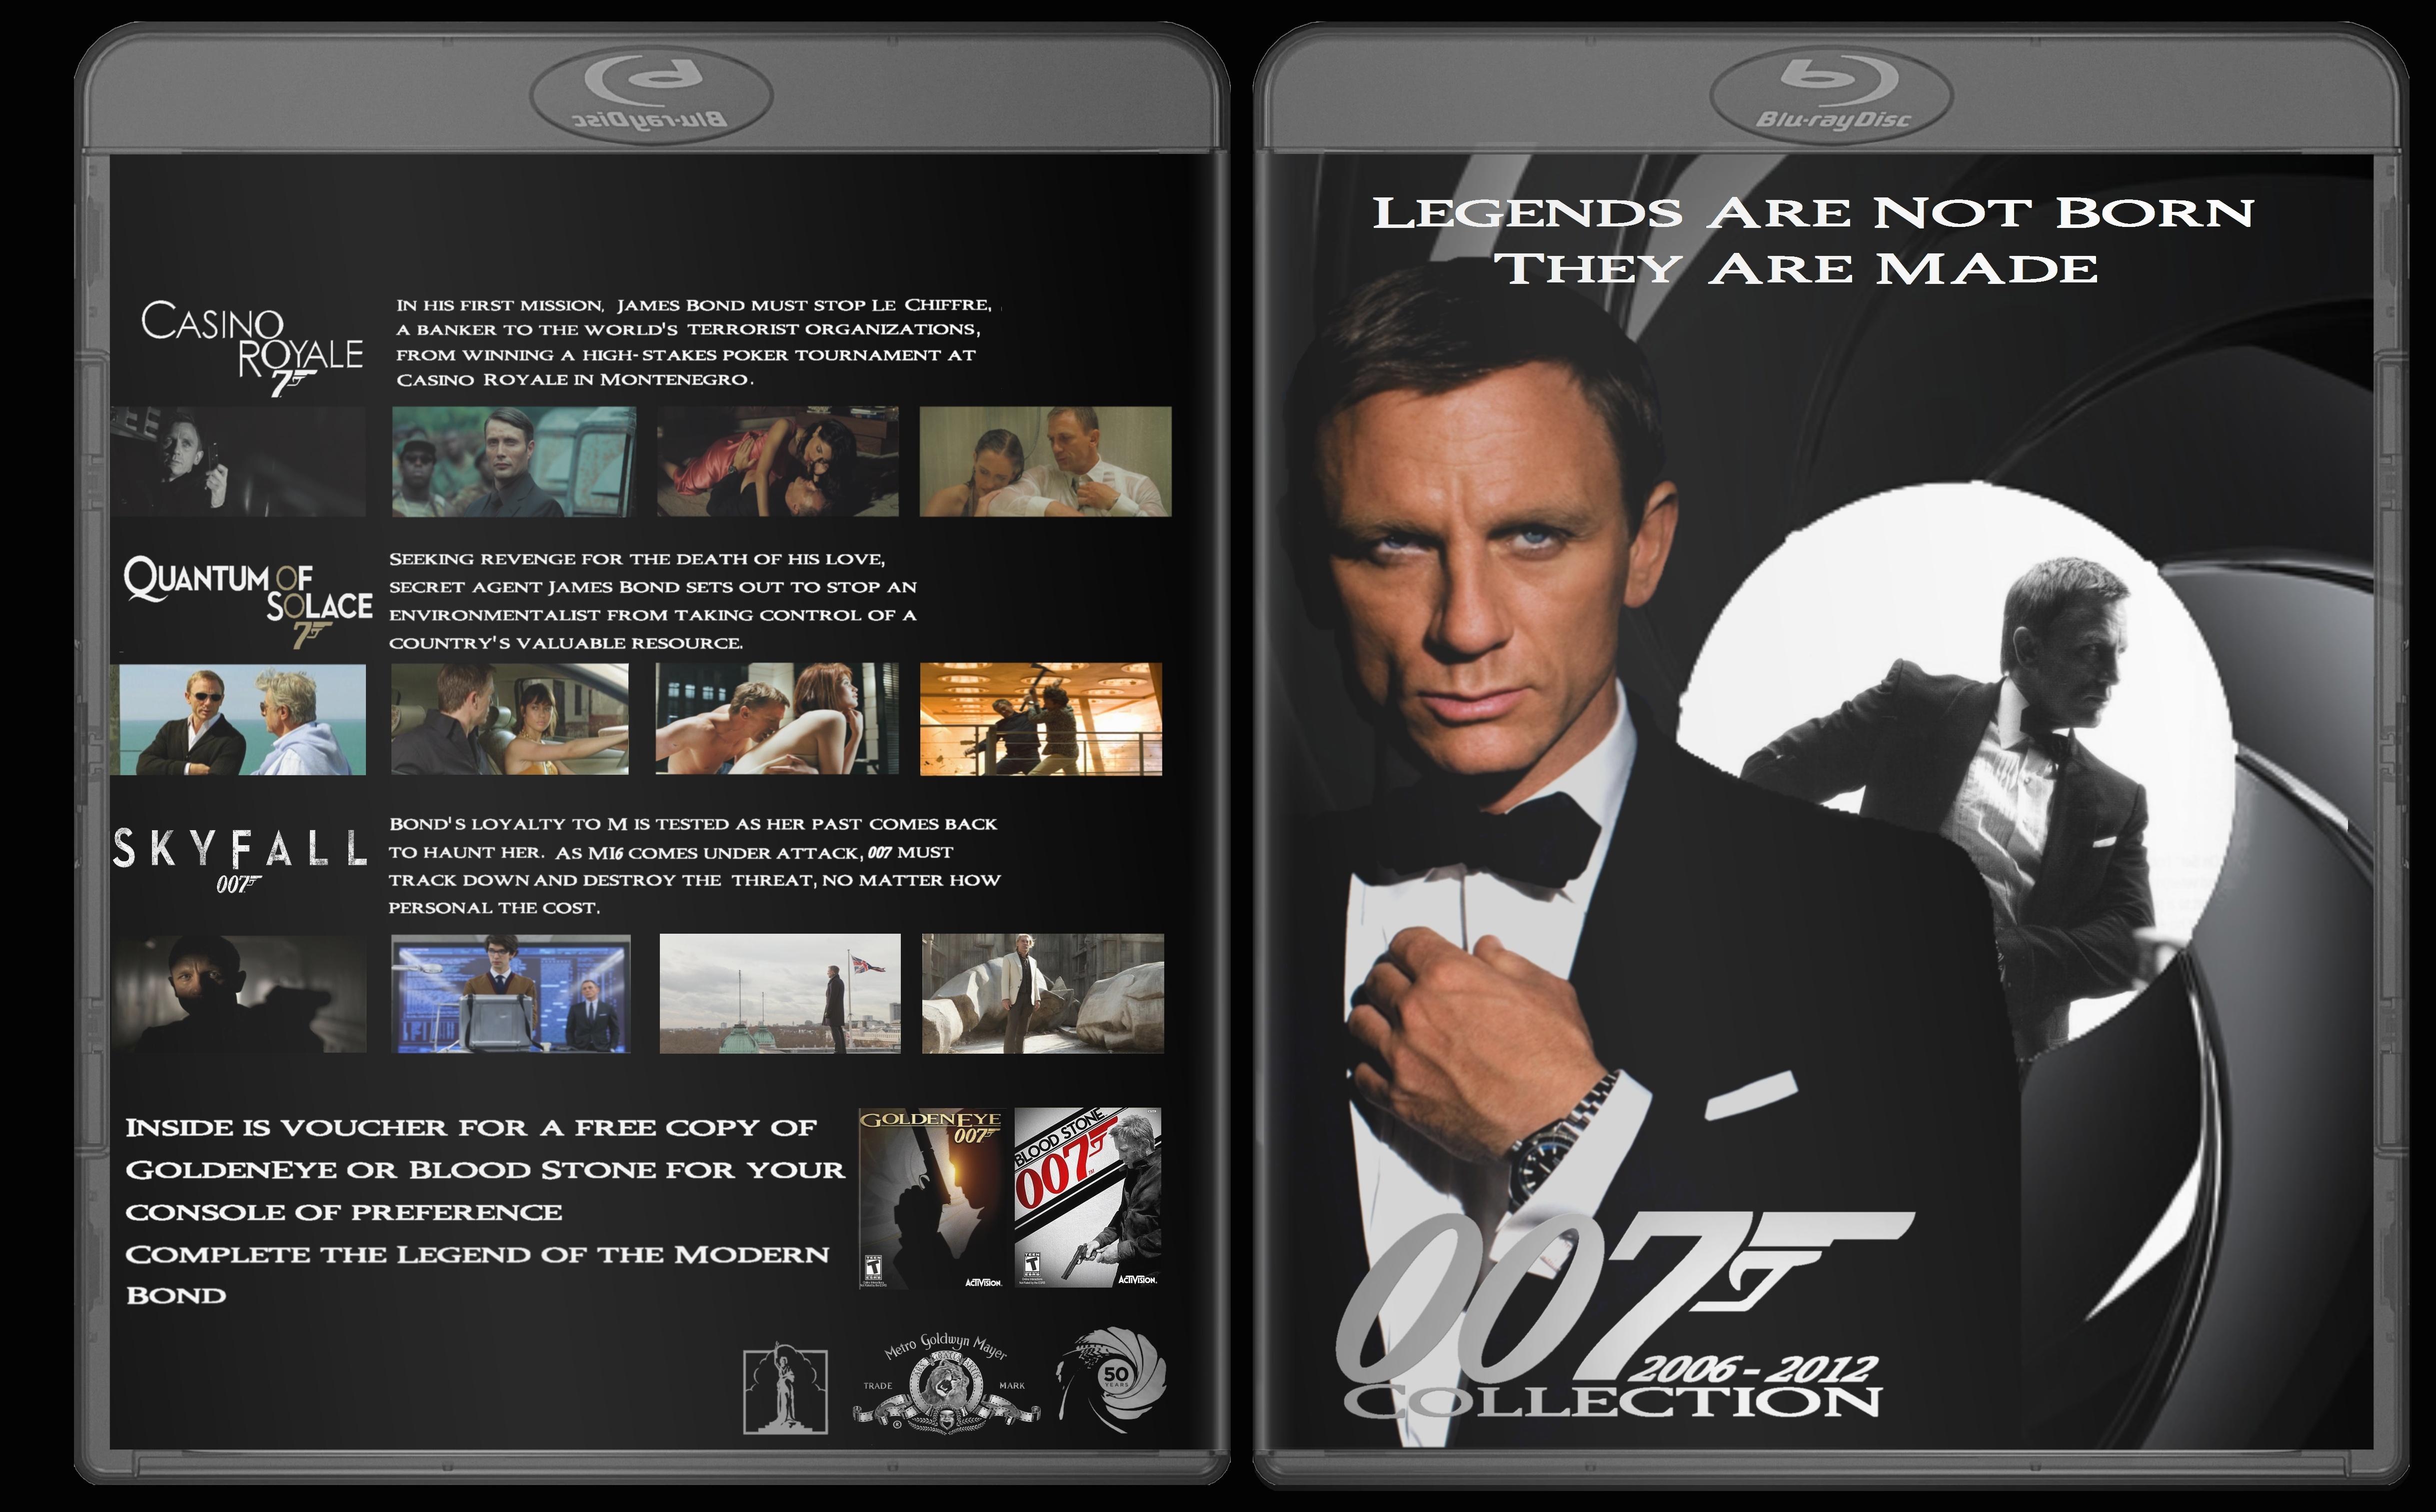 James Bond 007 Collection[Part 01]DvDrip-Subzero